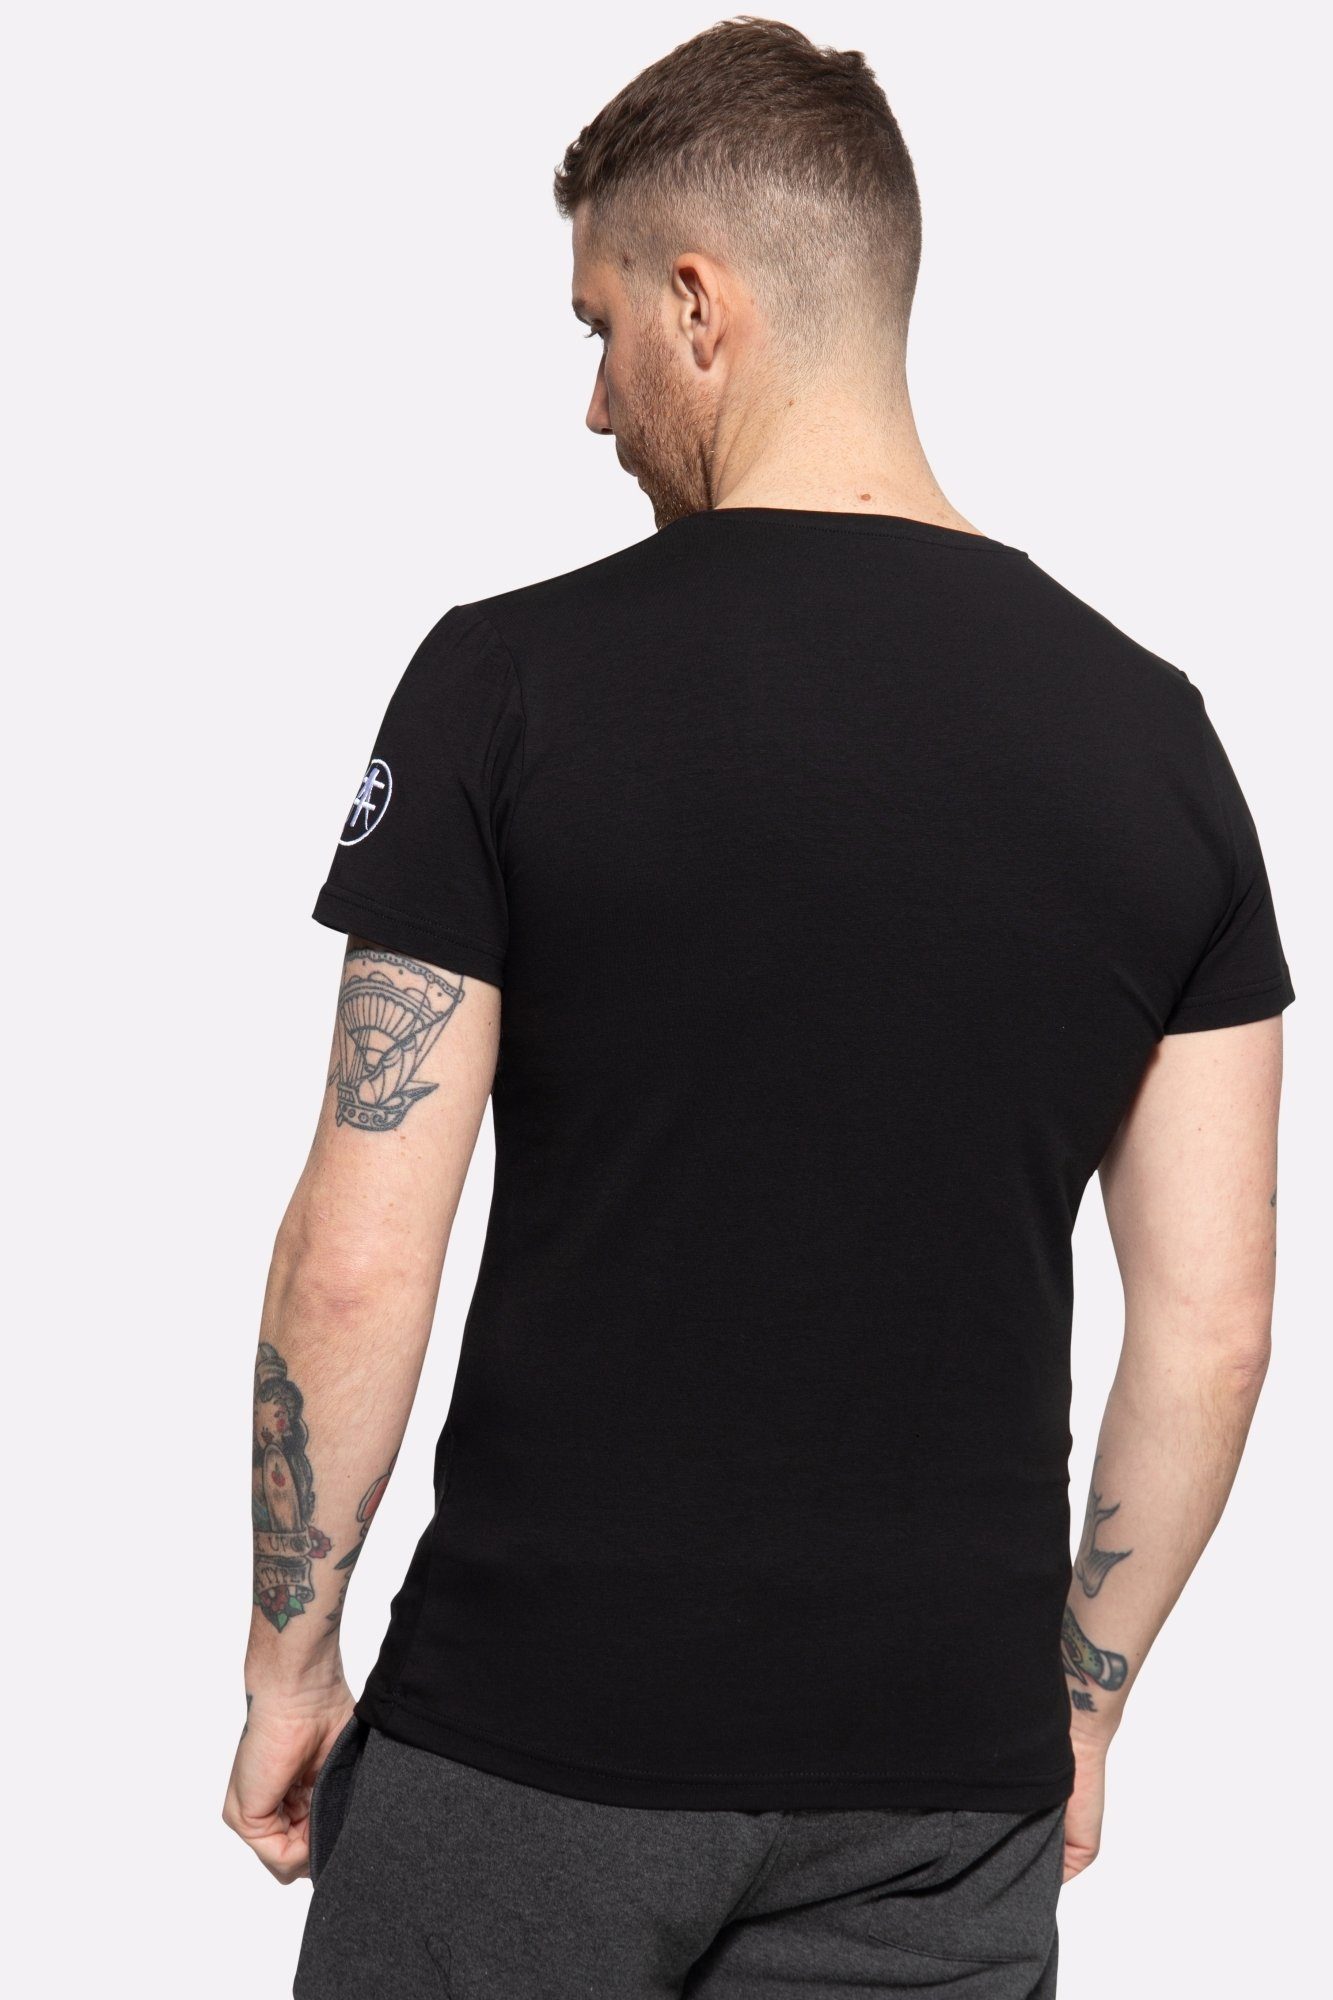 Kontrast-Print Fighters mit Tanaka Gladiator coolem T-Shirt Akito schwarz